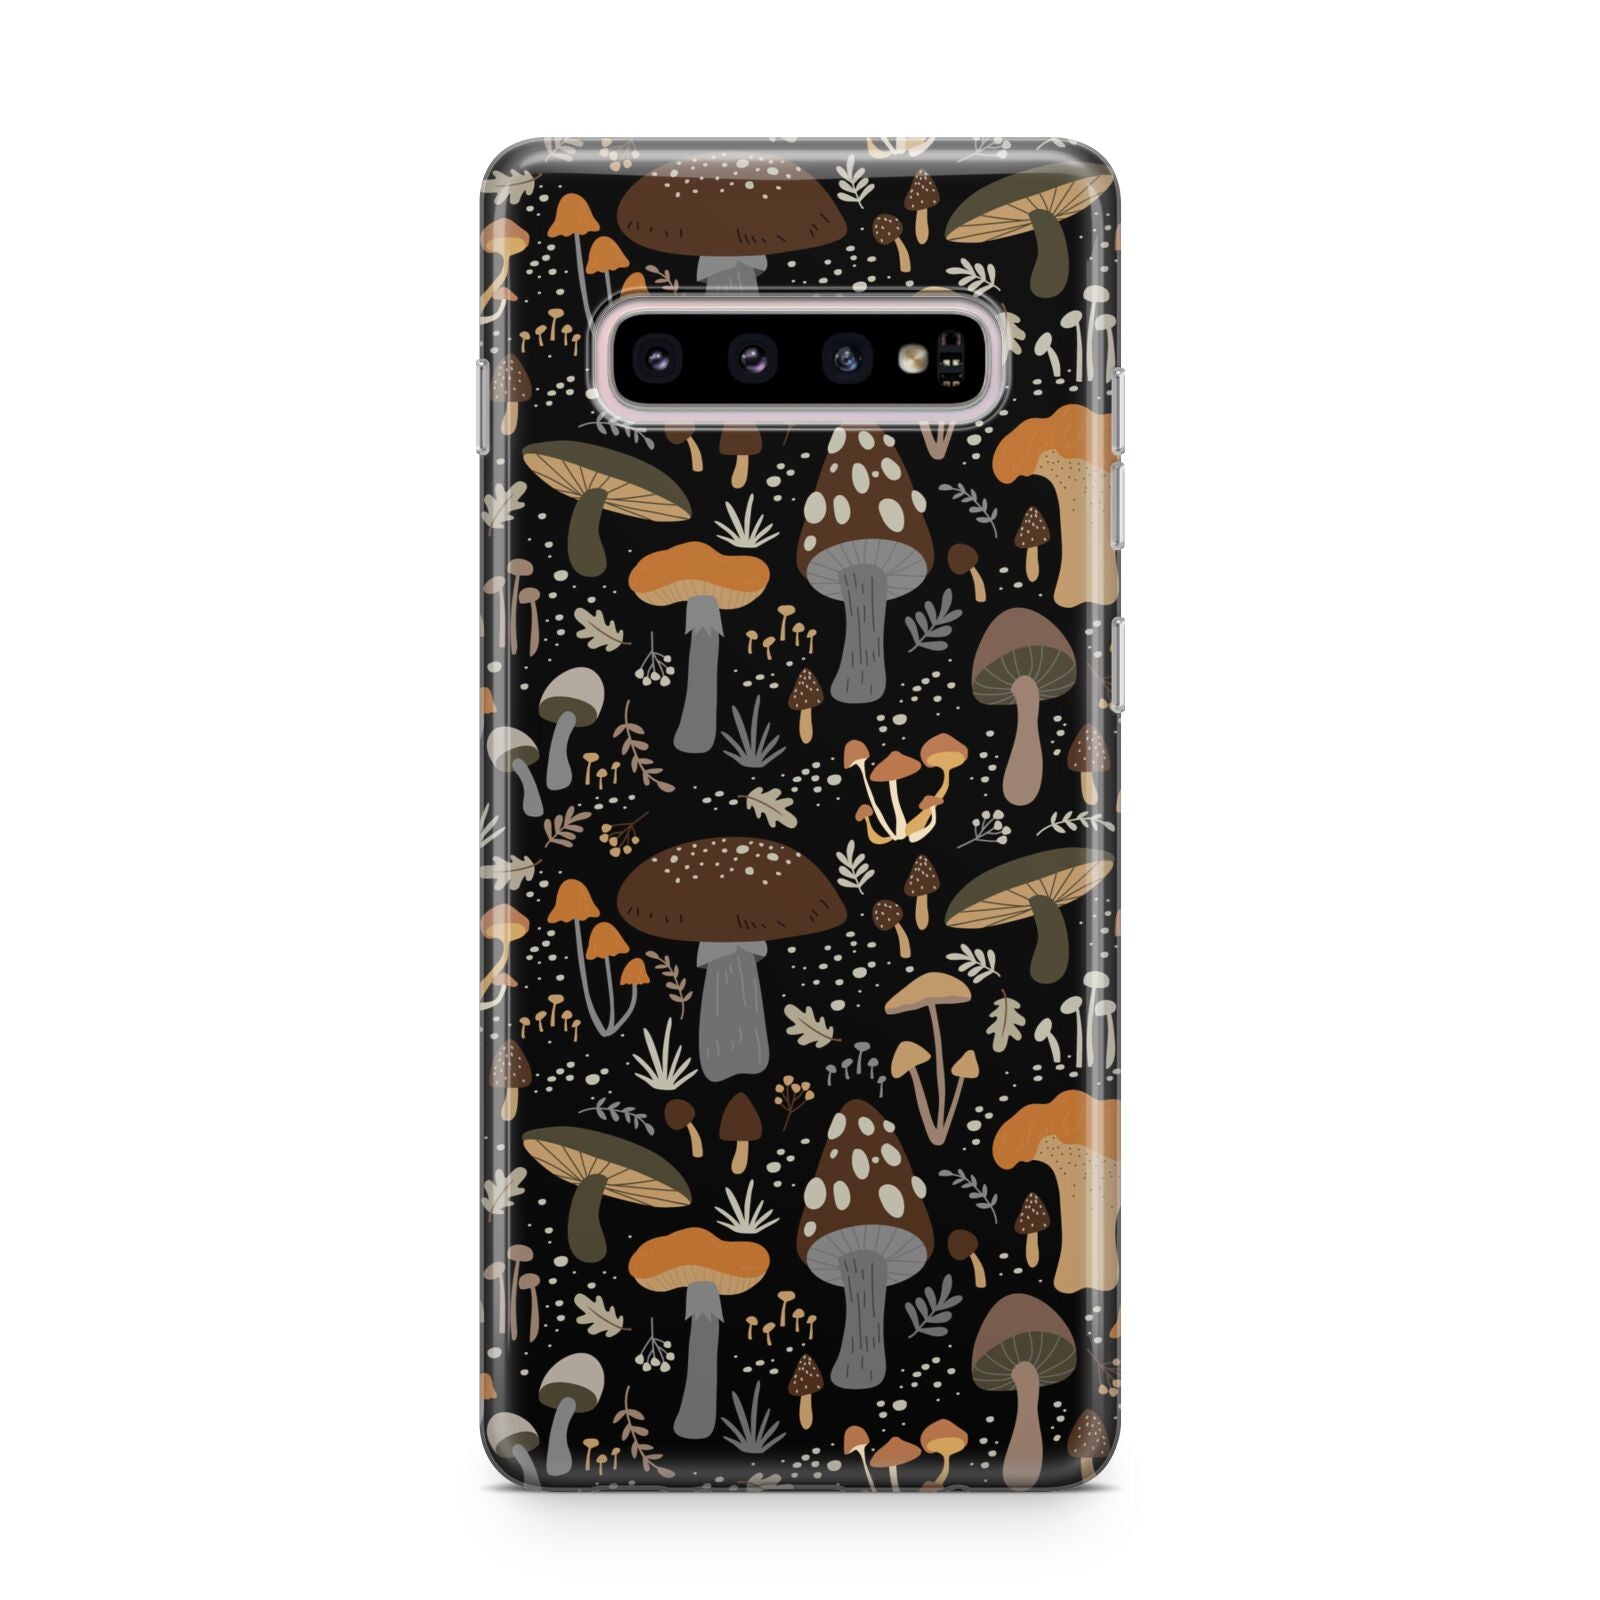 Mushroom Samsung Galaxy S10 Plus Case